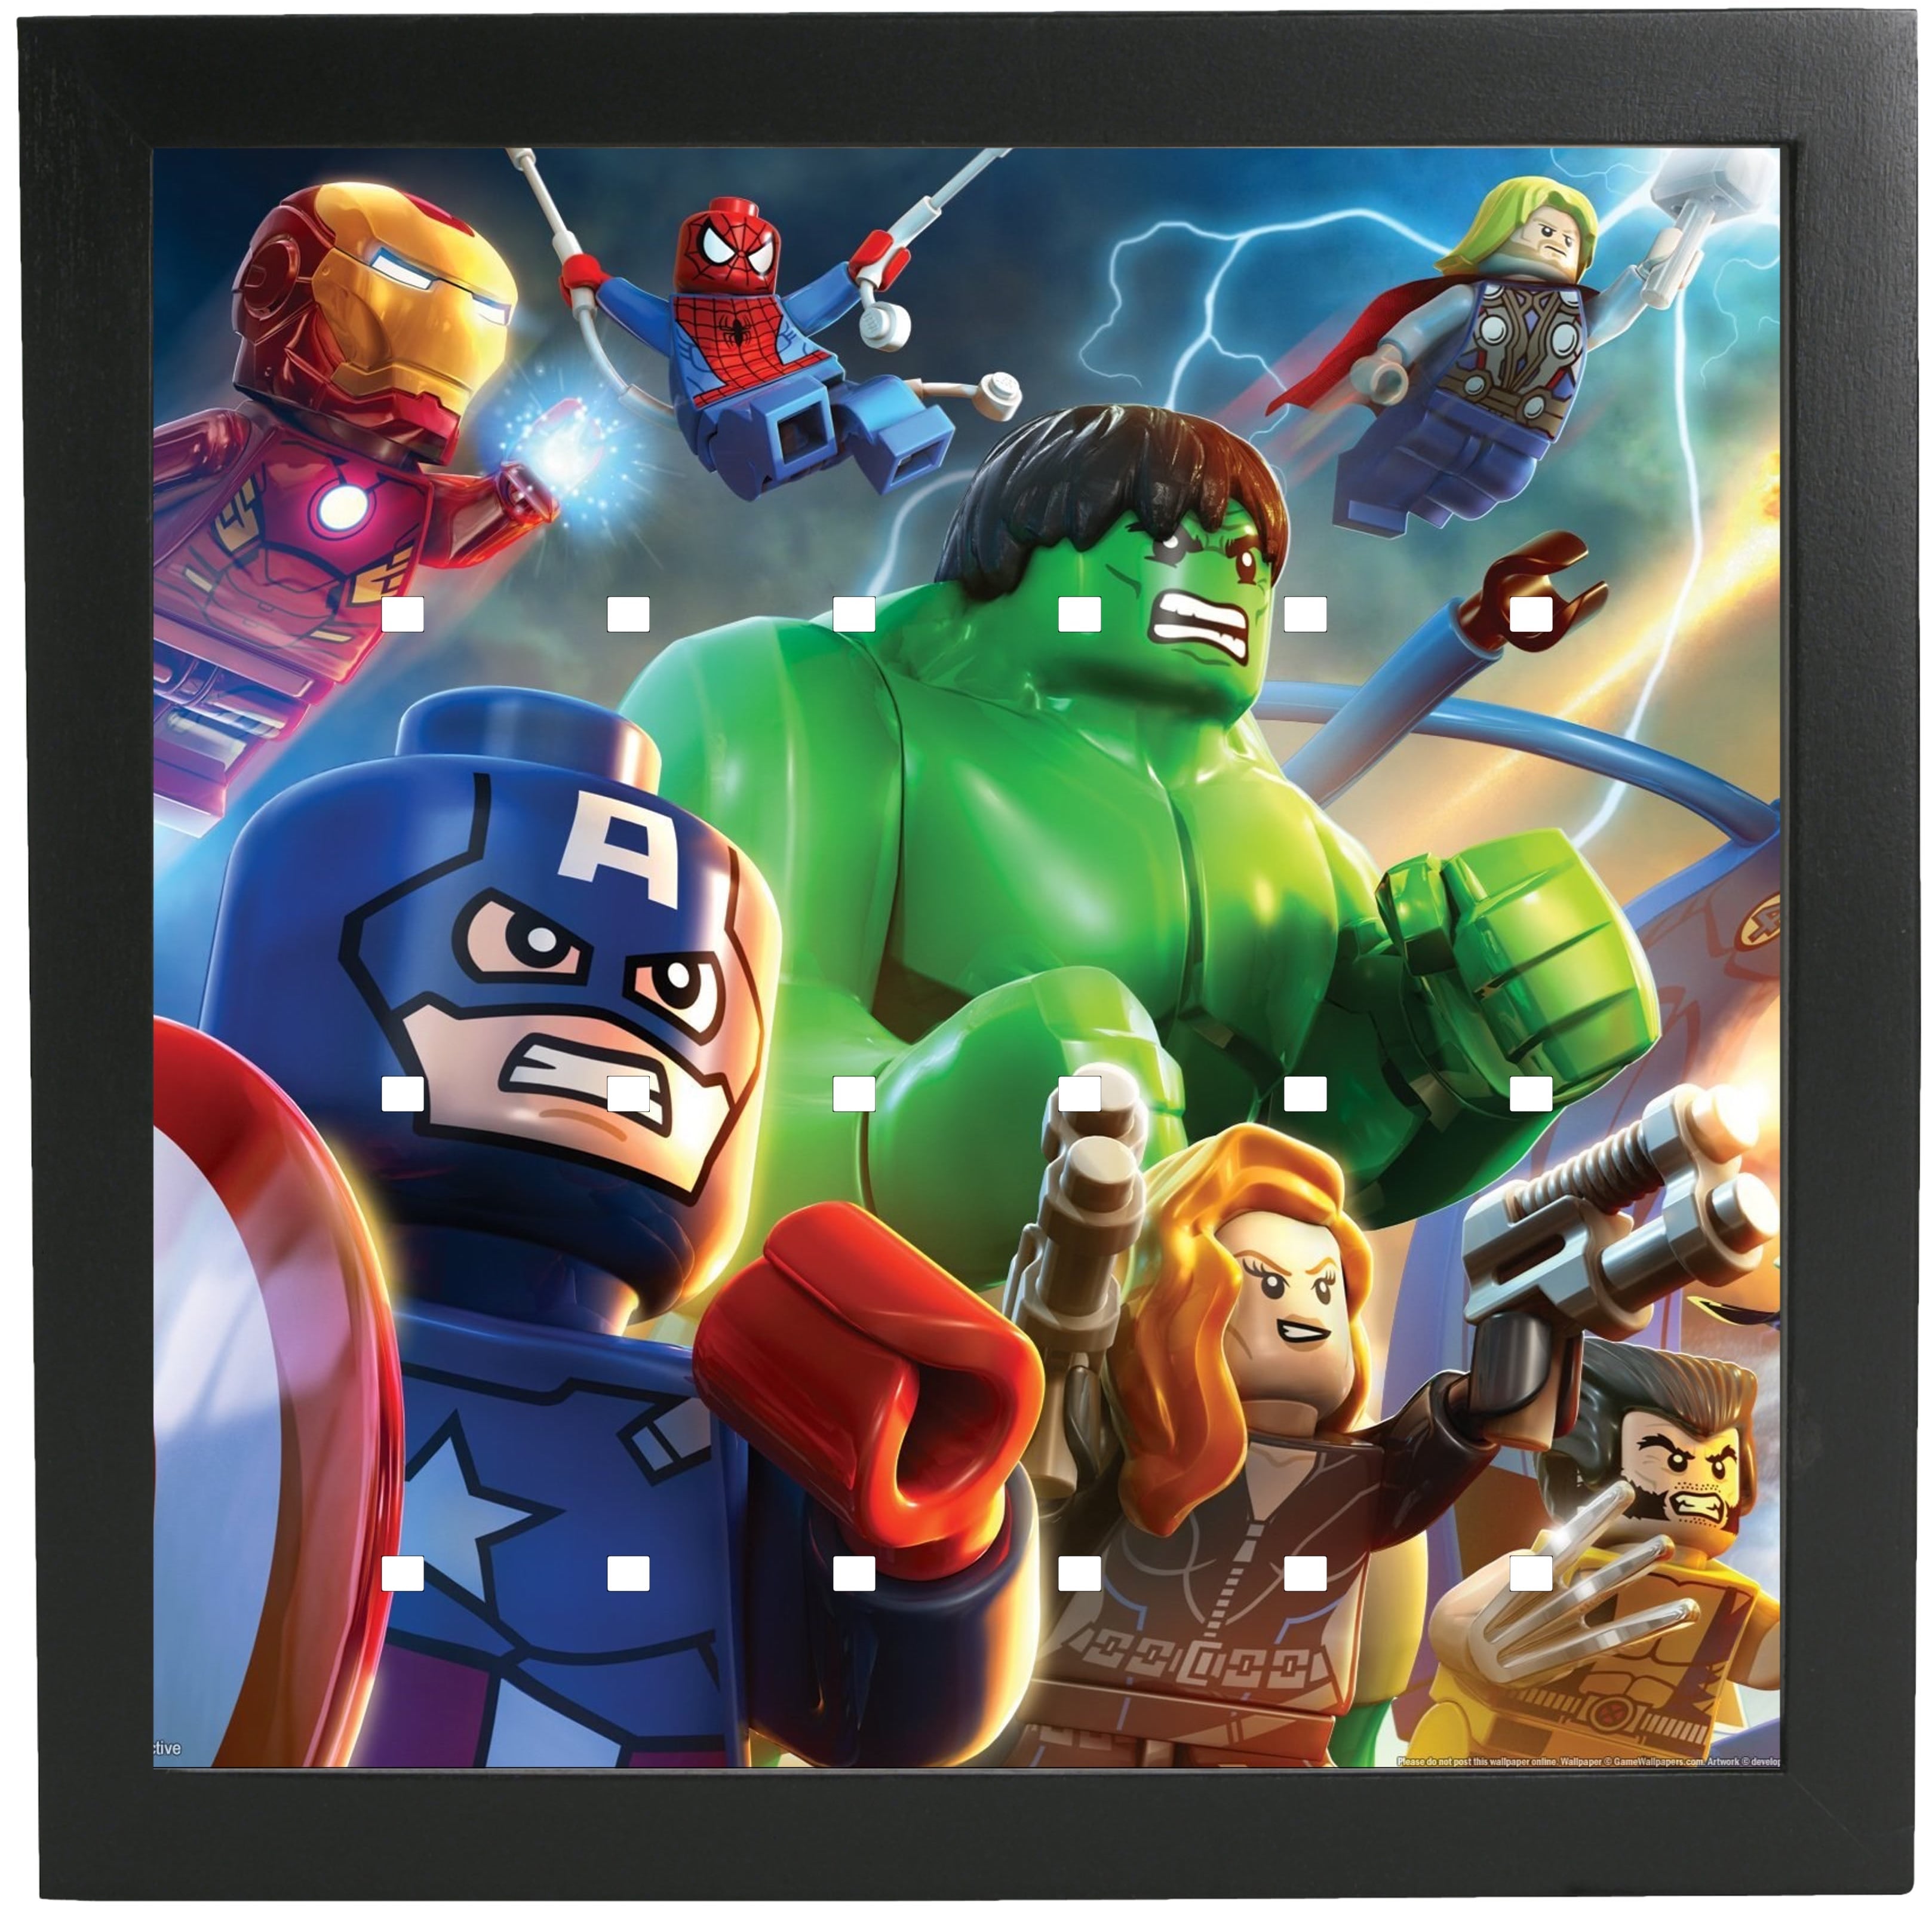 LEGO Marvel Super Heroes Minifigure - Spider-Man - Extra Extra Bricks